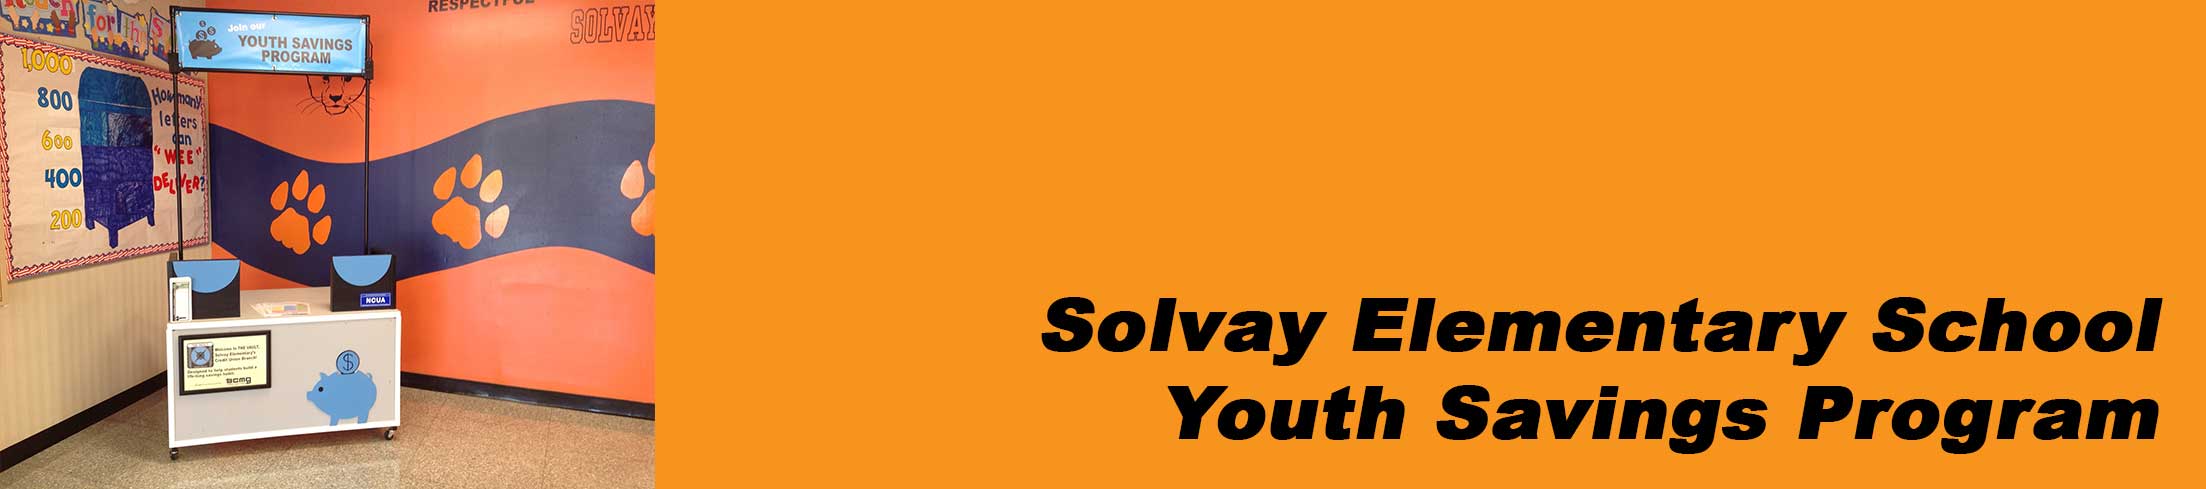 Solvay Elementary School Youth Savings Program